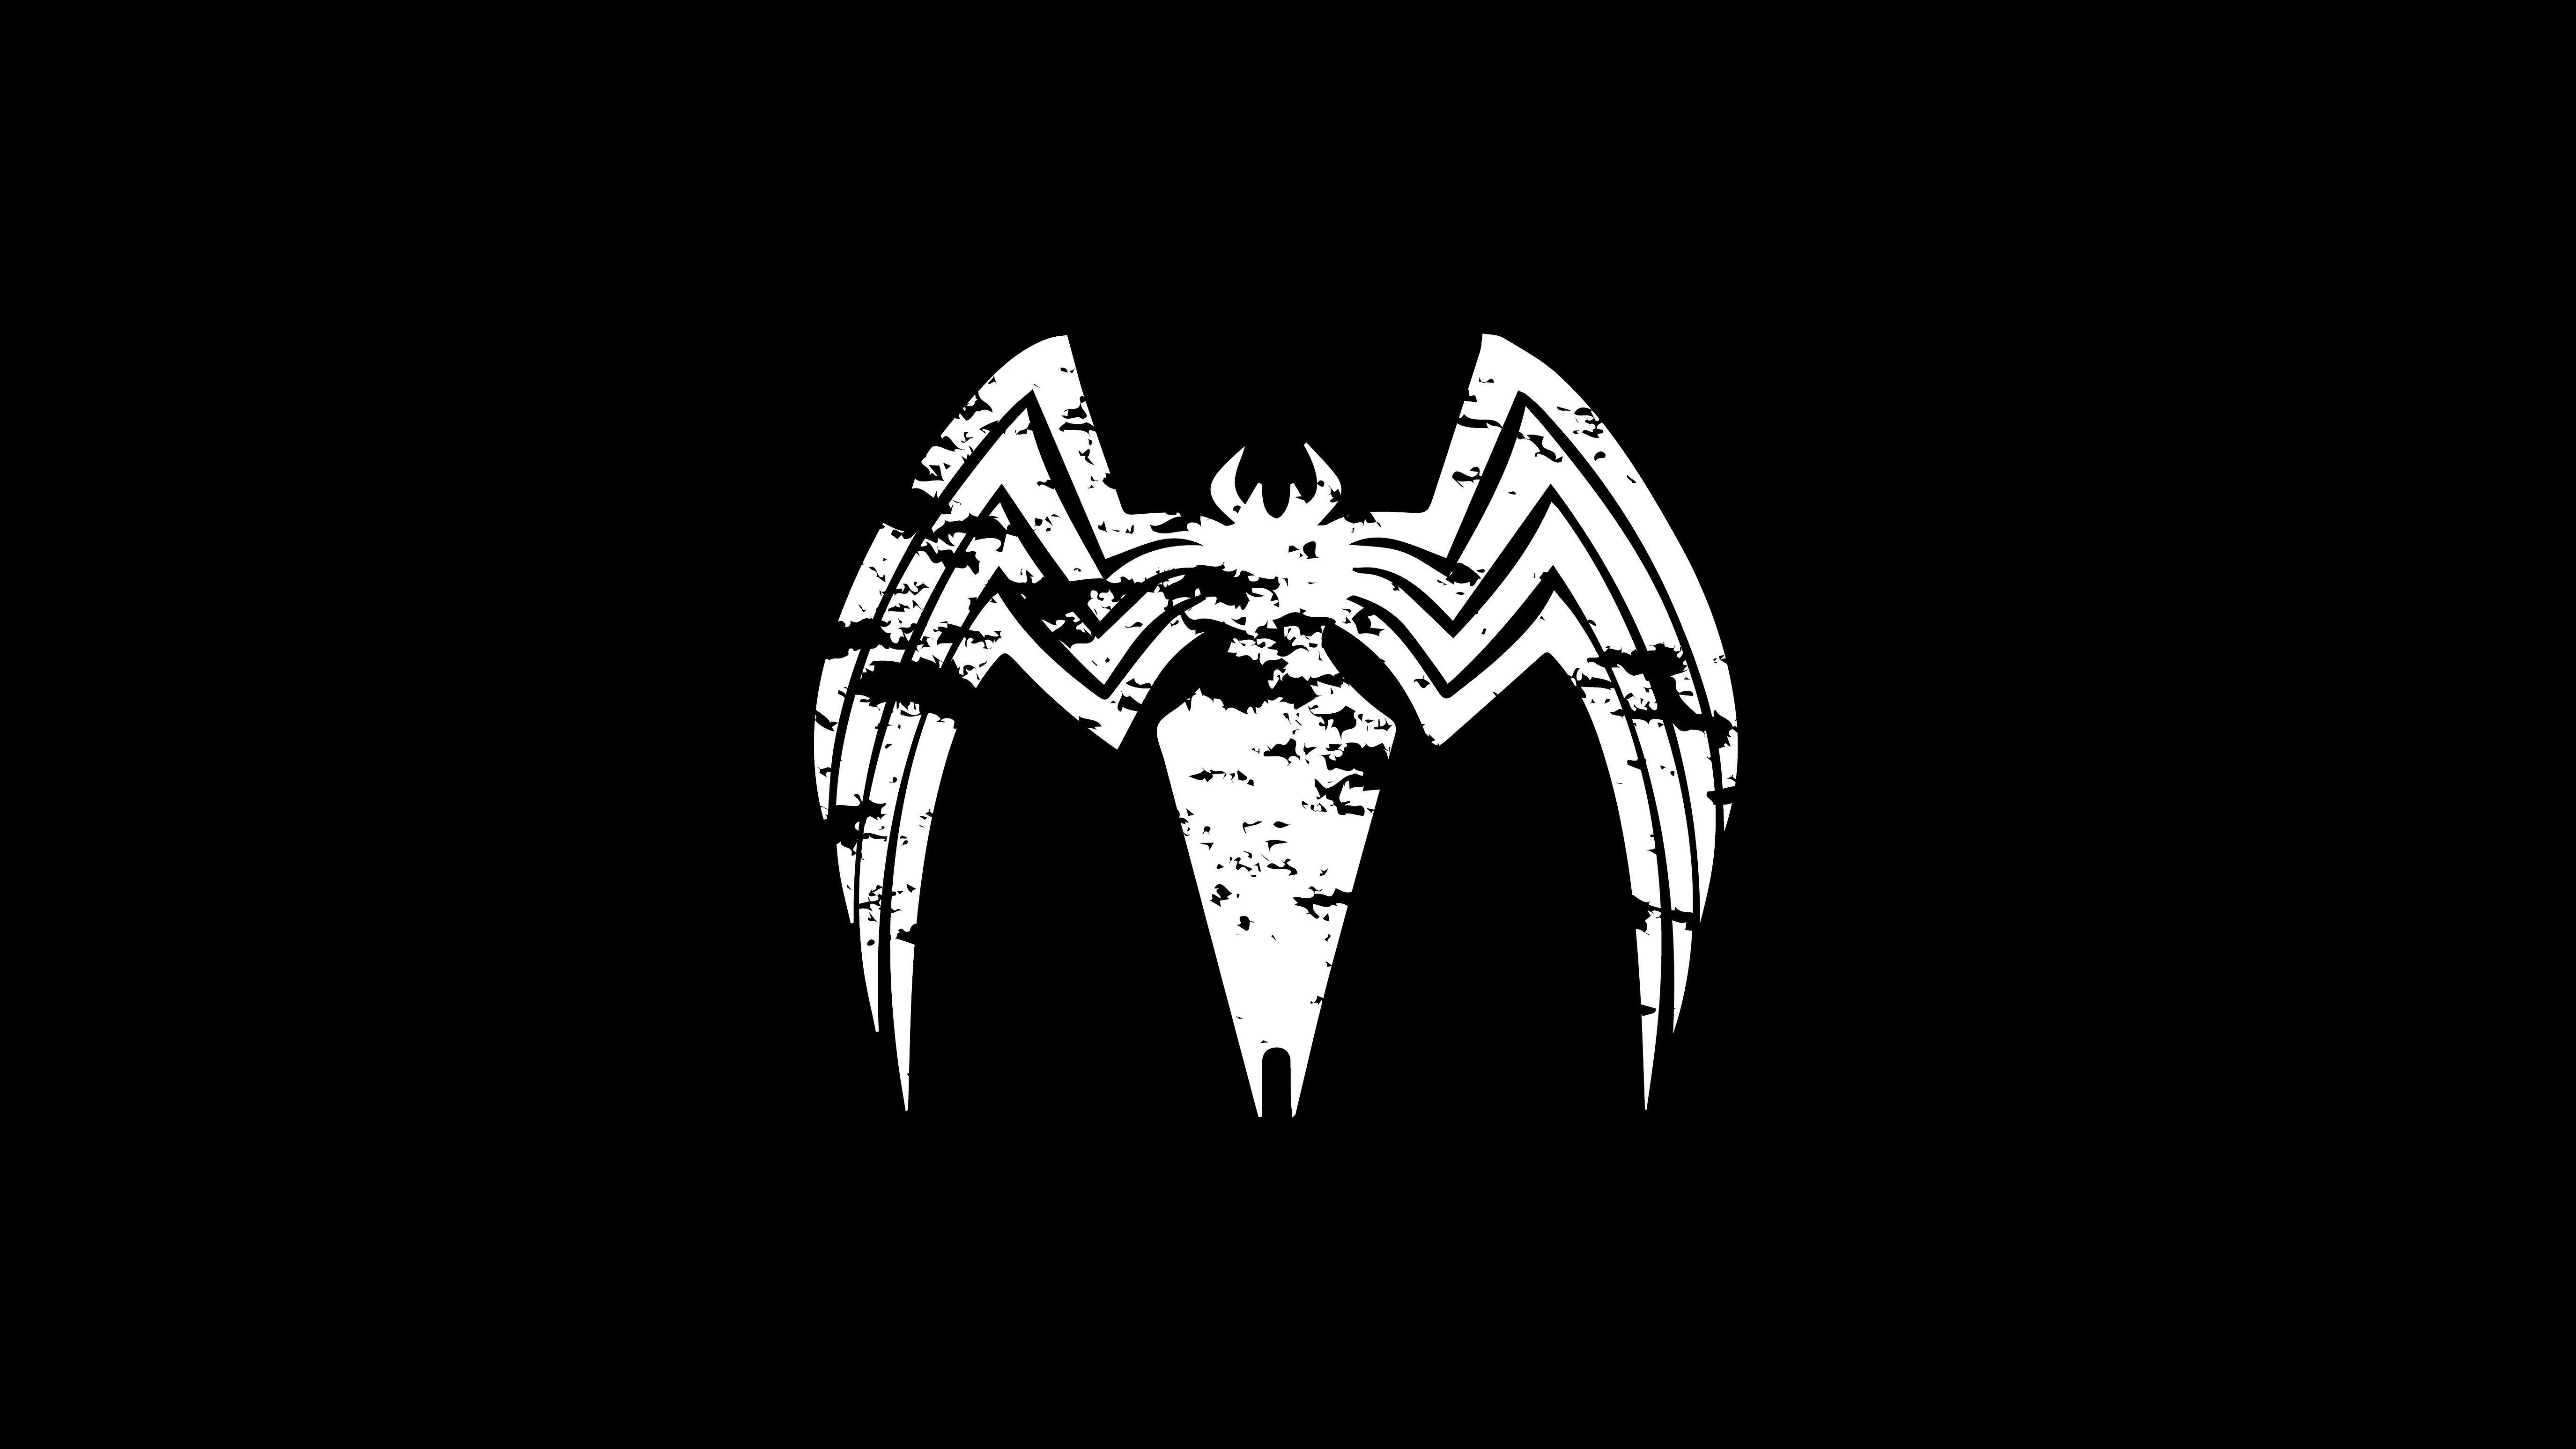 Venom Logo Wallpapers - Top Free Venom Logo Backgrounds ...